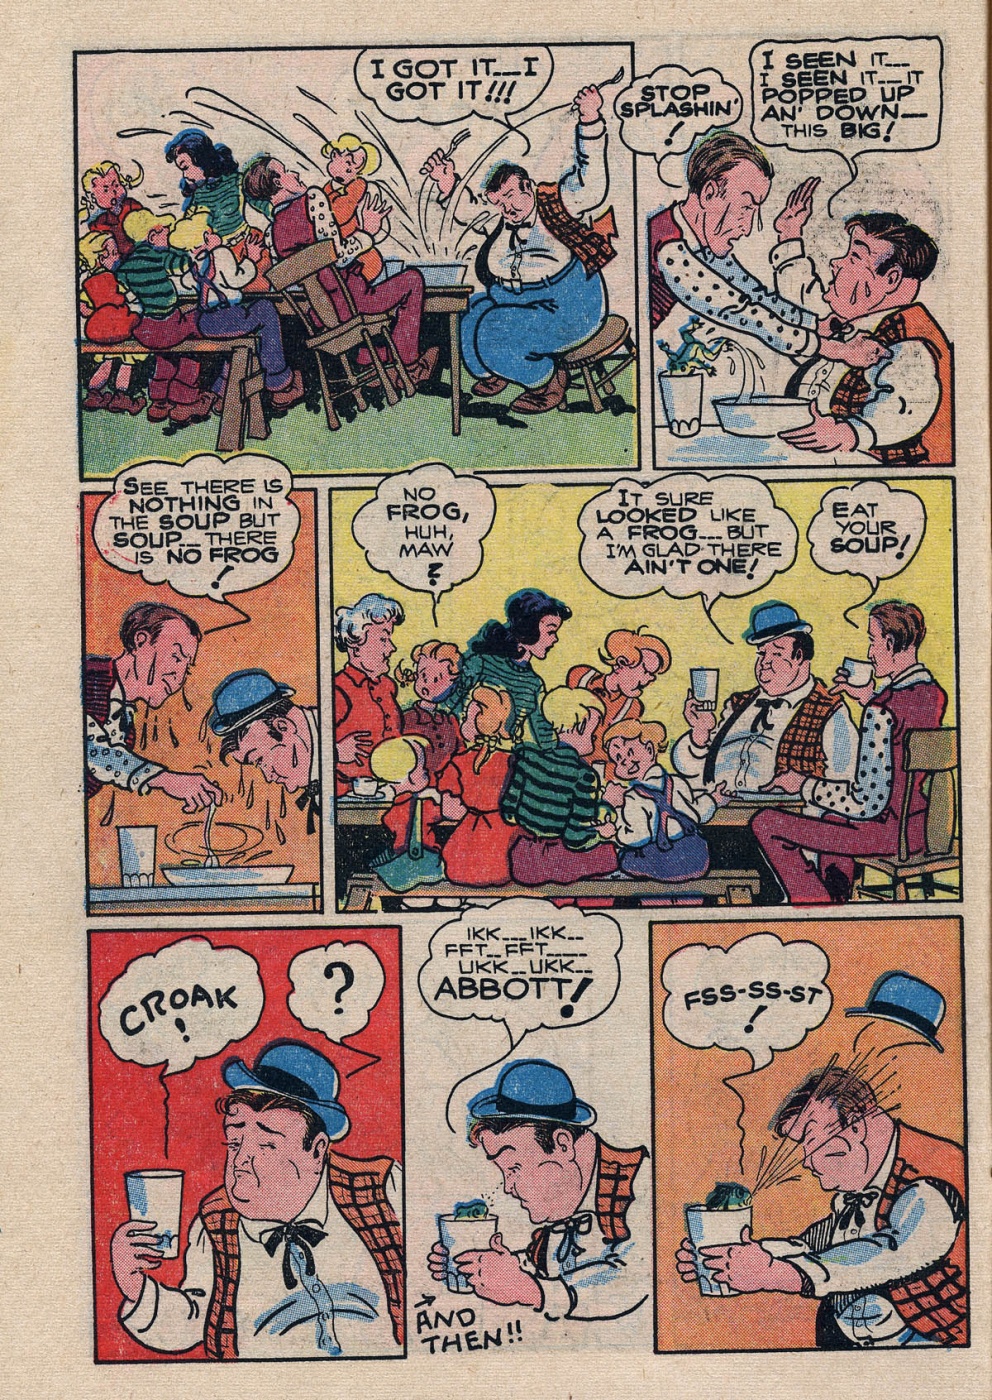 Funny Comic Strips - Abbott and Costello 001 (Feb 1948) 16